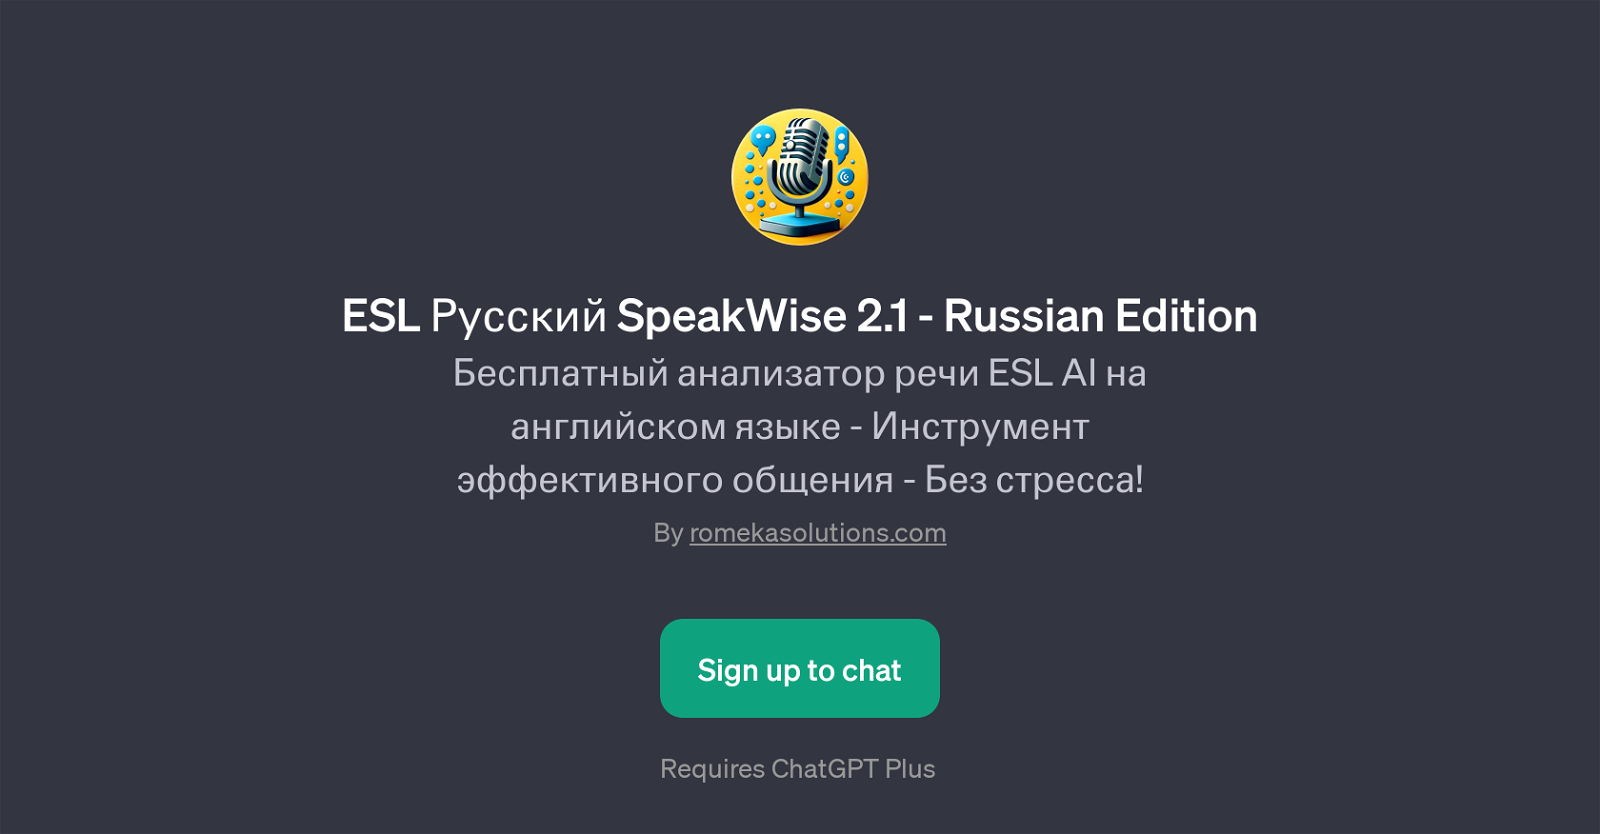 ESL  SpeakWise 2.1 - Russian Edition website